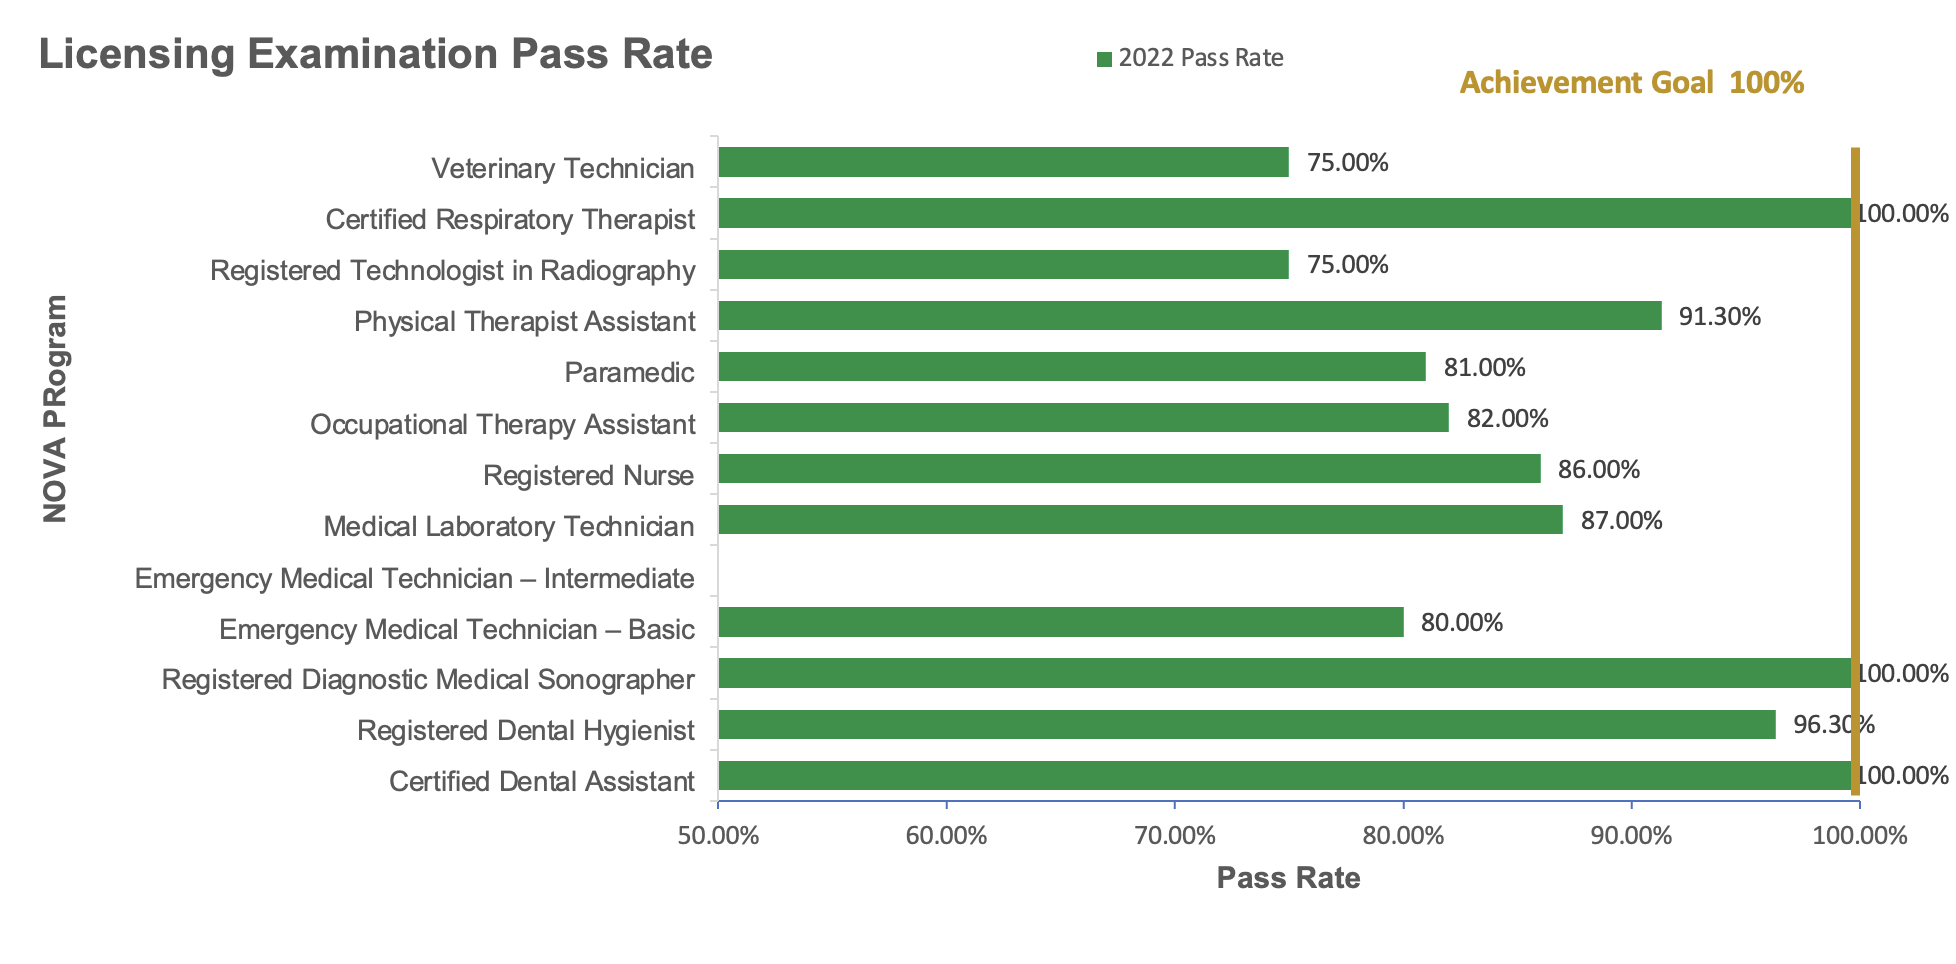 Licensing exam pass rate